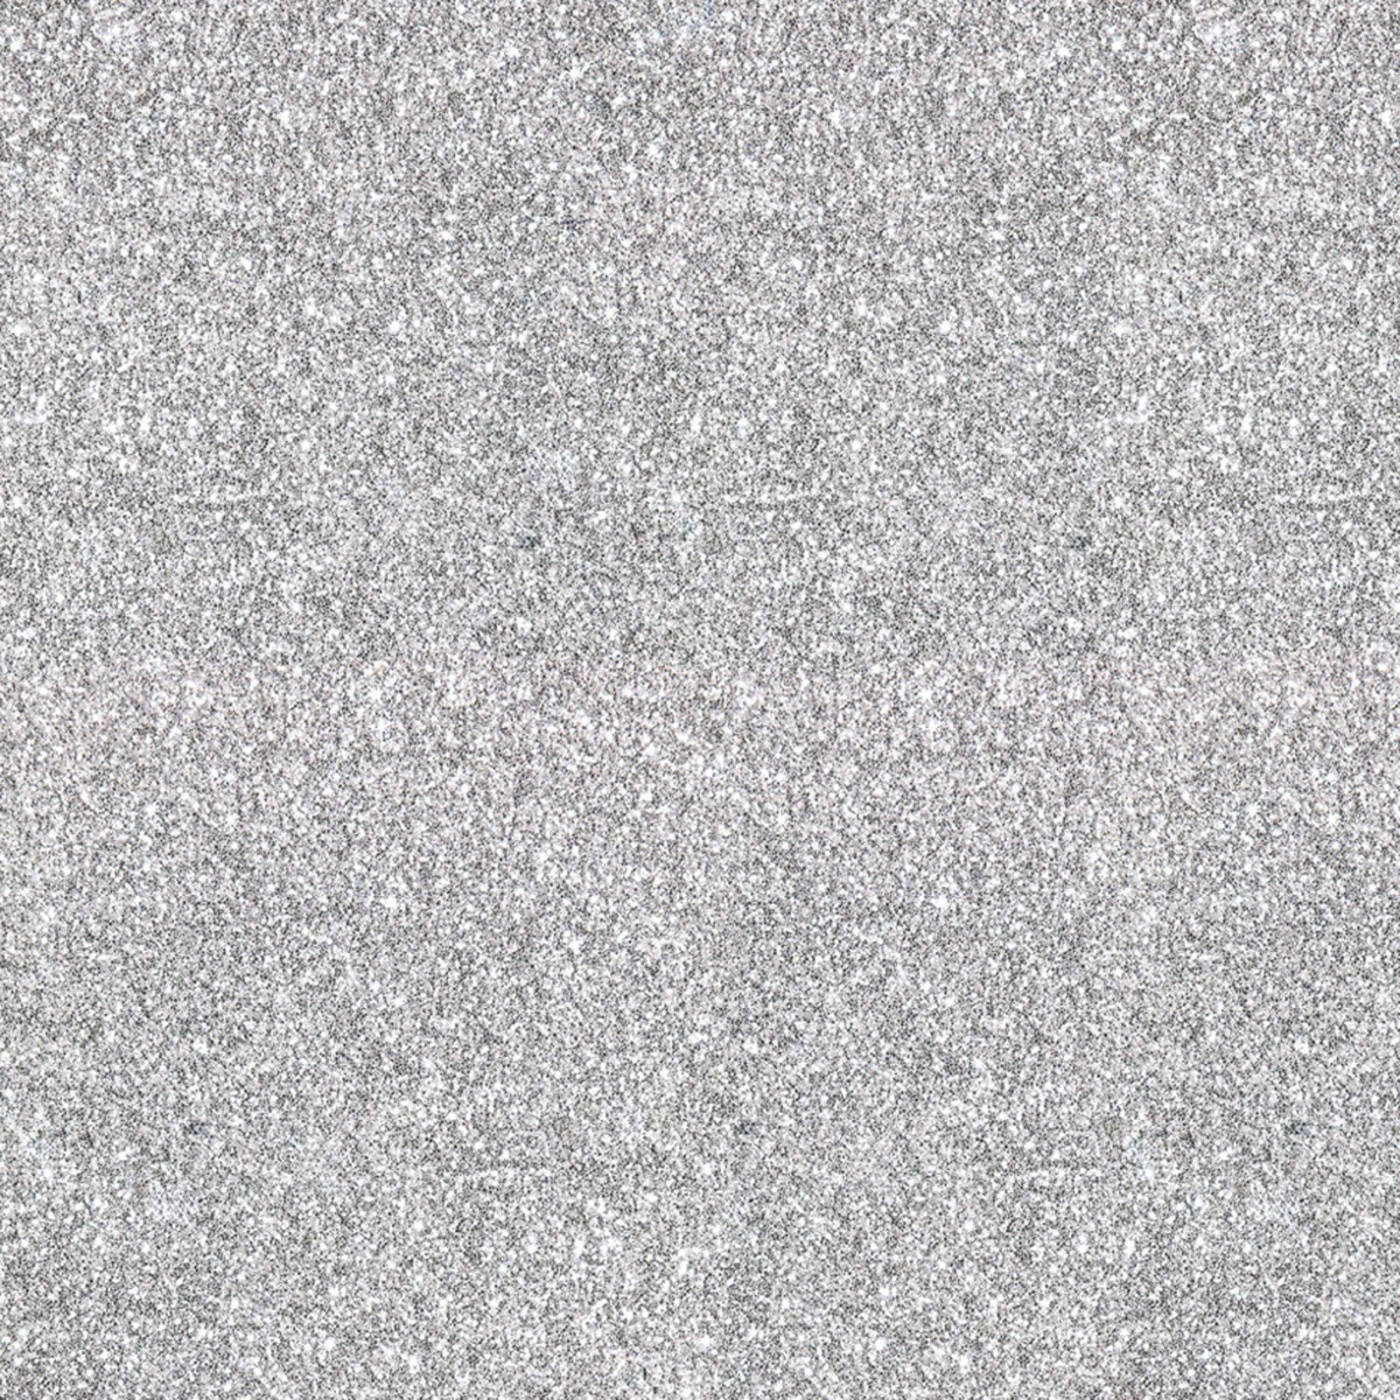 Silverglittrande Glitter. Wallpaper